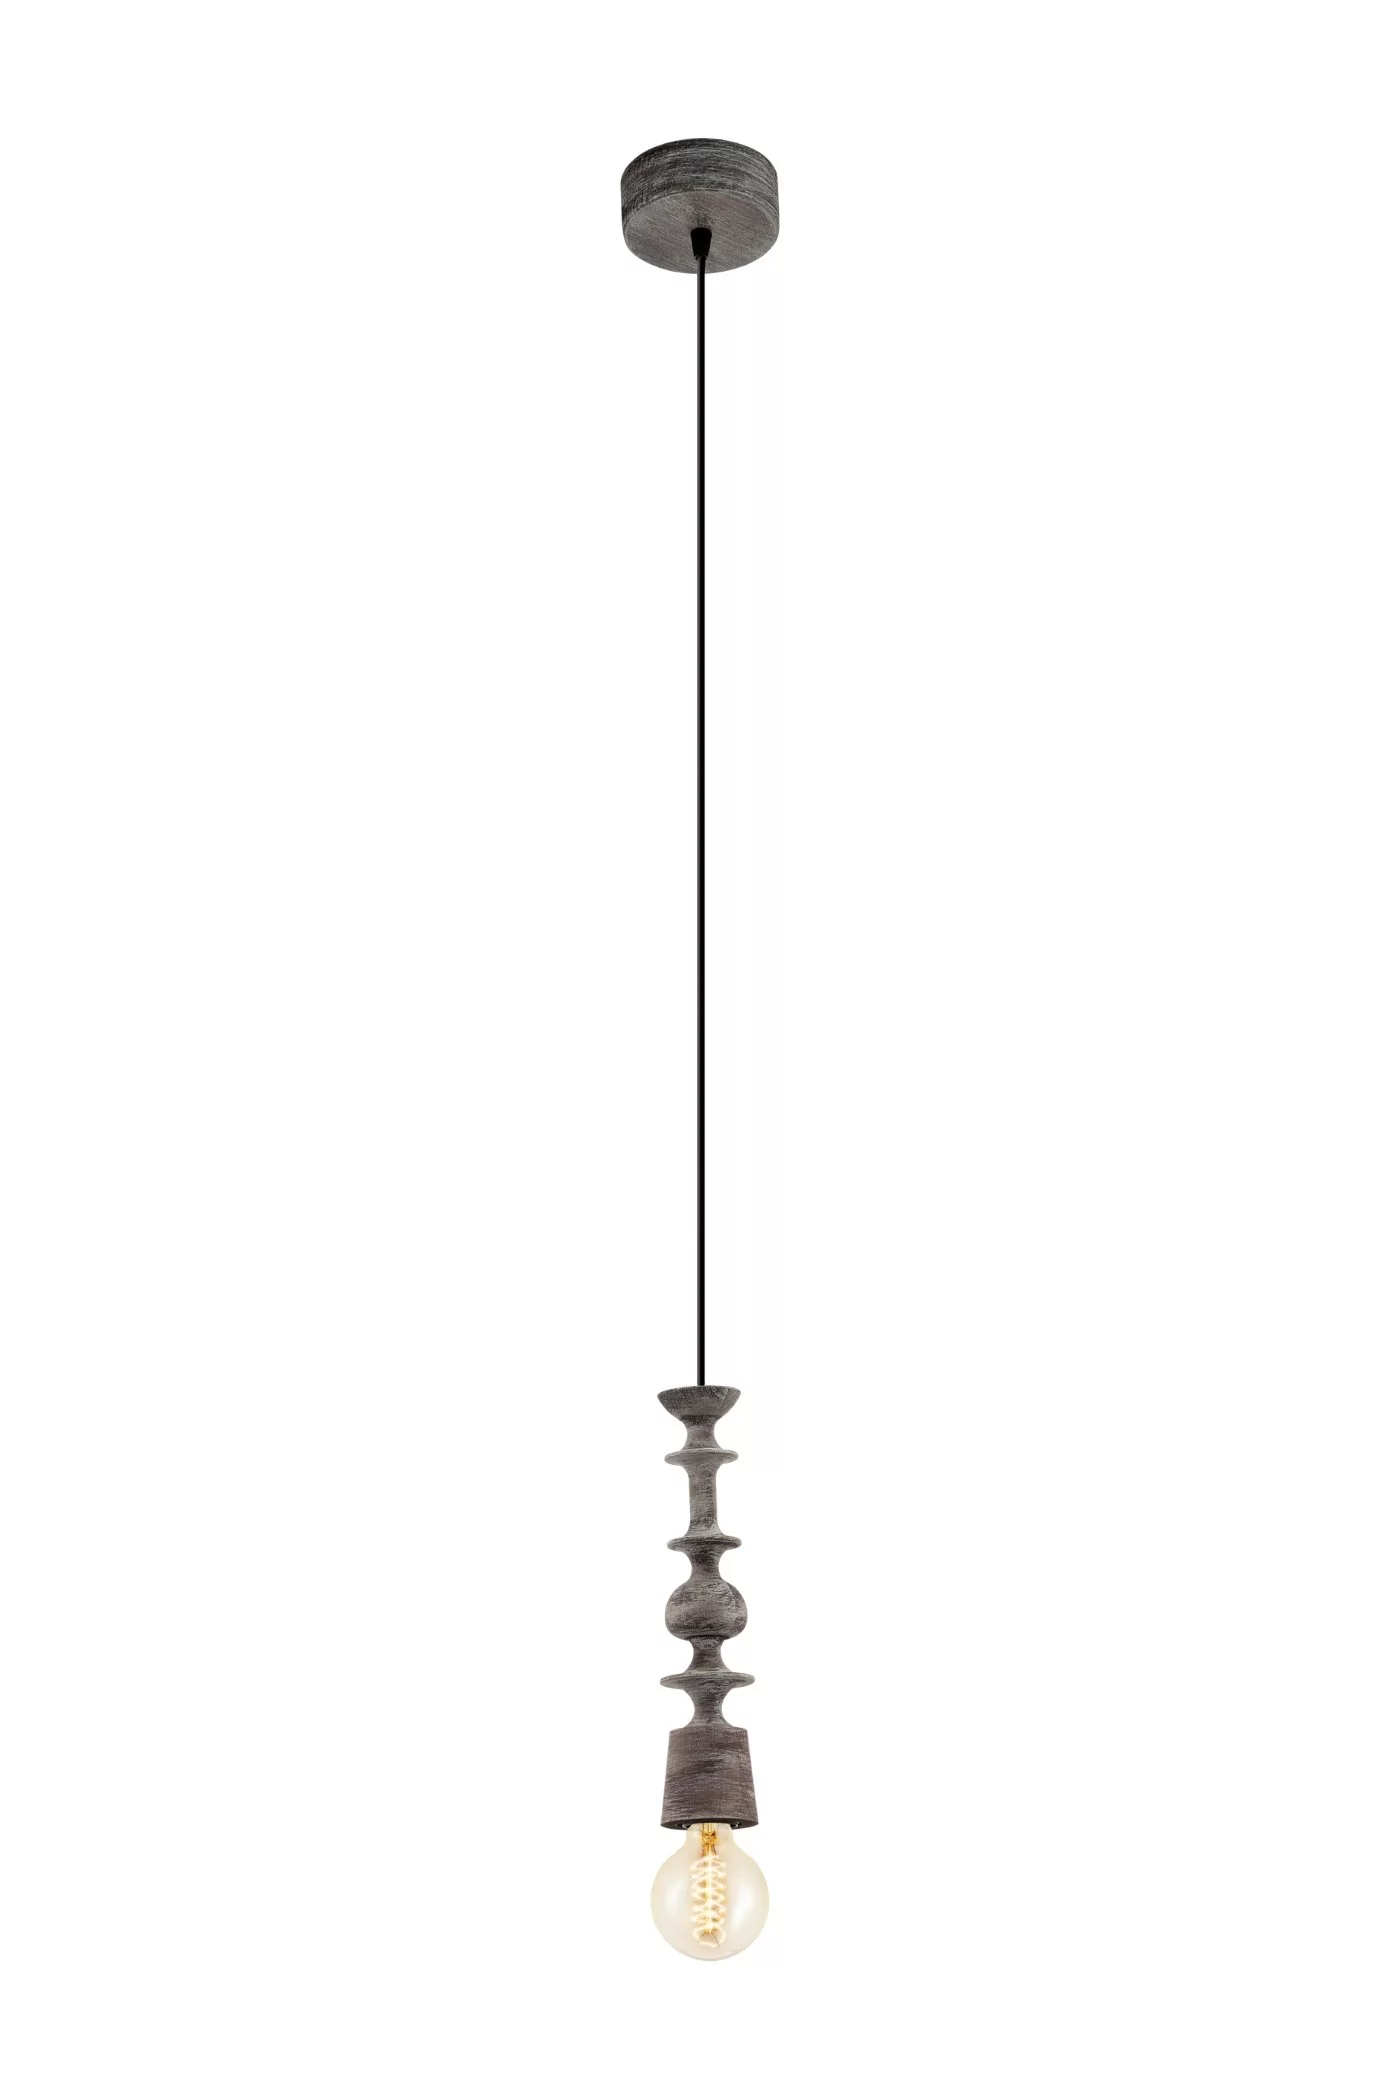   
                        
                        Люстра EGLO (Австрия) 89045    
                         в стиле Кантри.  
                        Тип источника света: светодиодная лампа, сменная.                         Форма: Круг.                                                                          фото 1